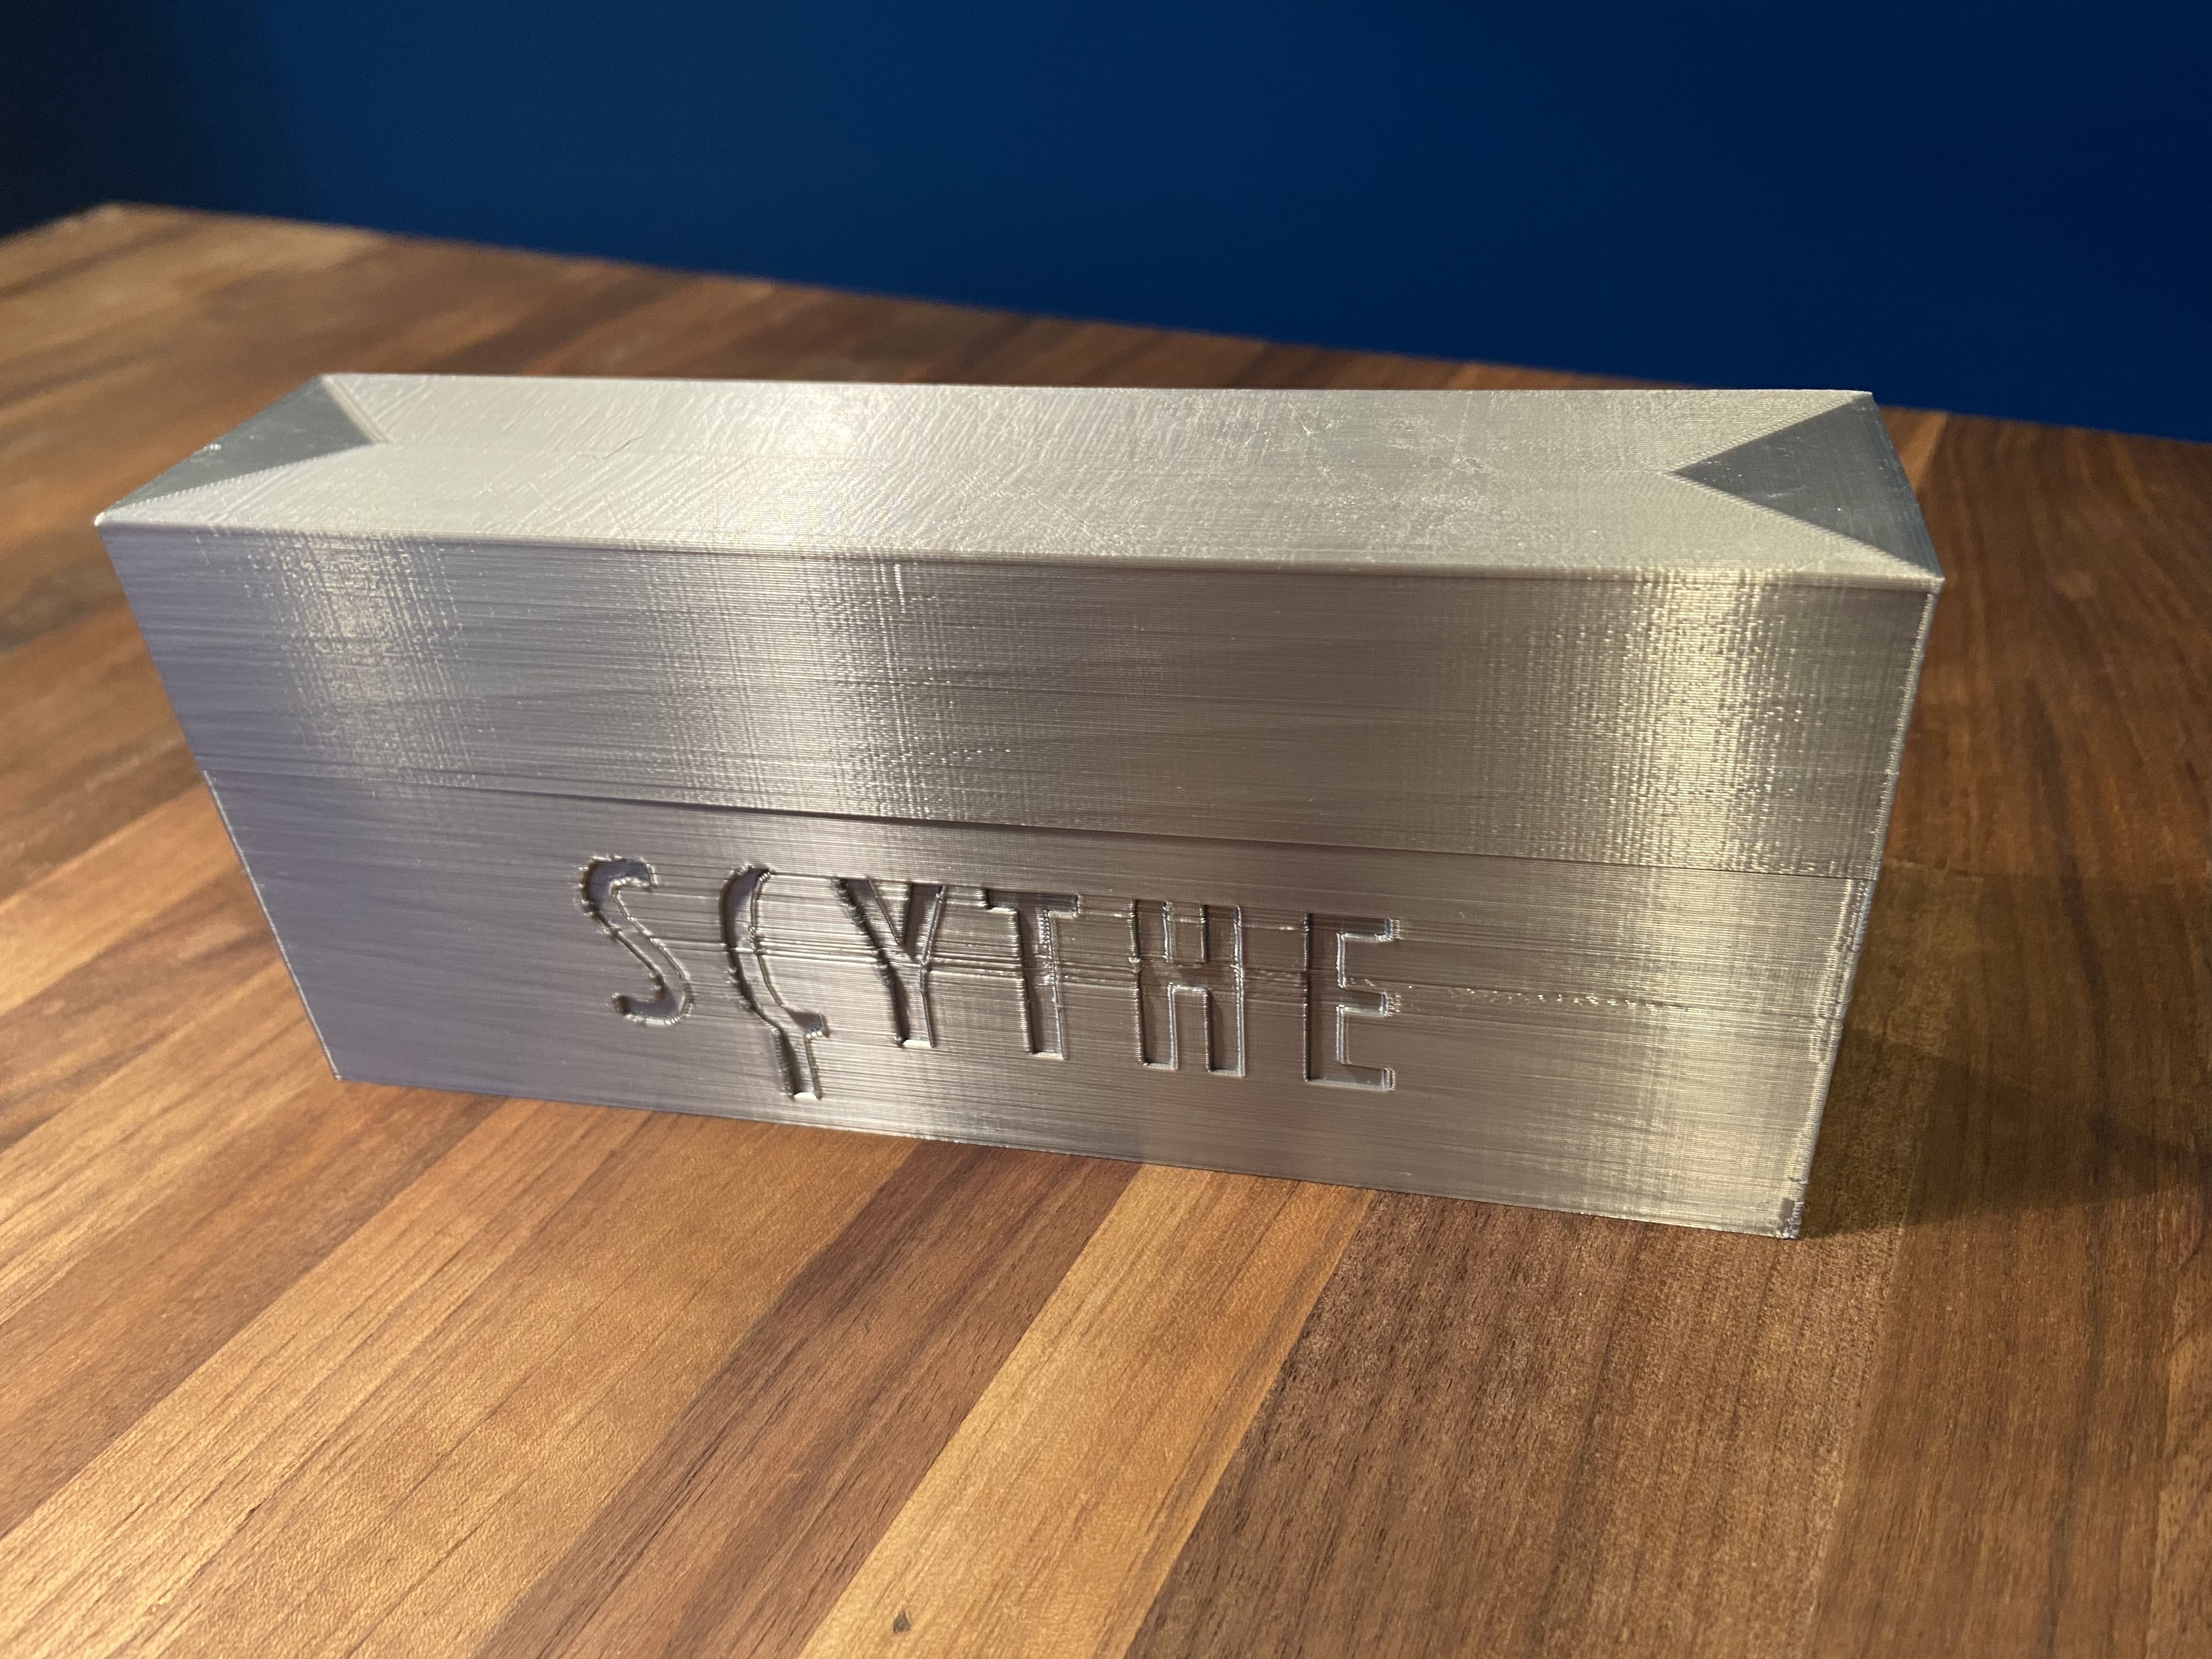 2019-12-13_19.30.44.jpg Download free STL file Scythe Card Holder • Object to 3D print, Hardcore3D